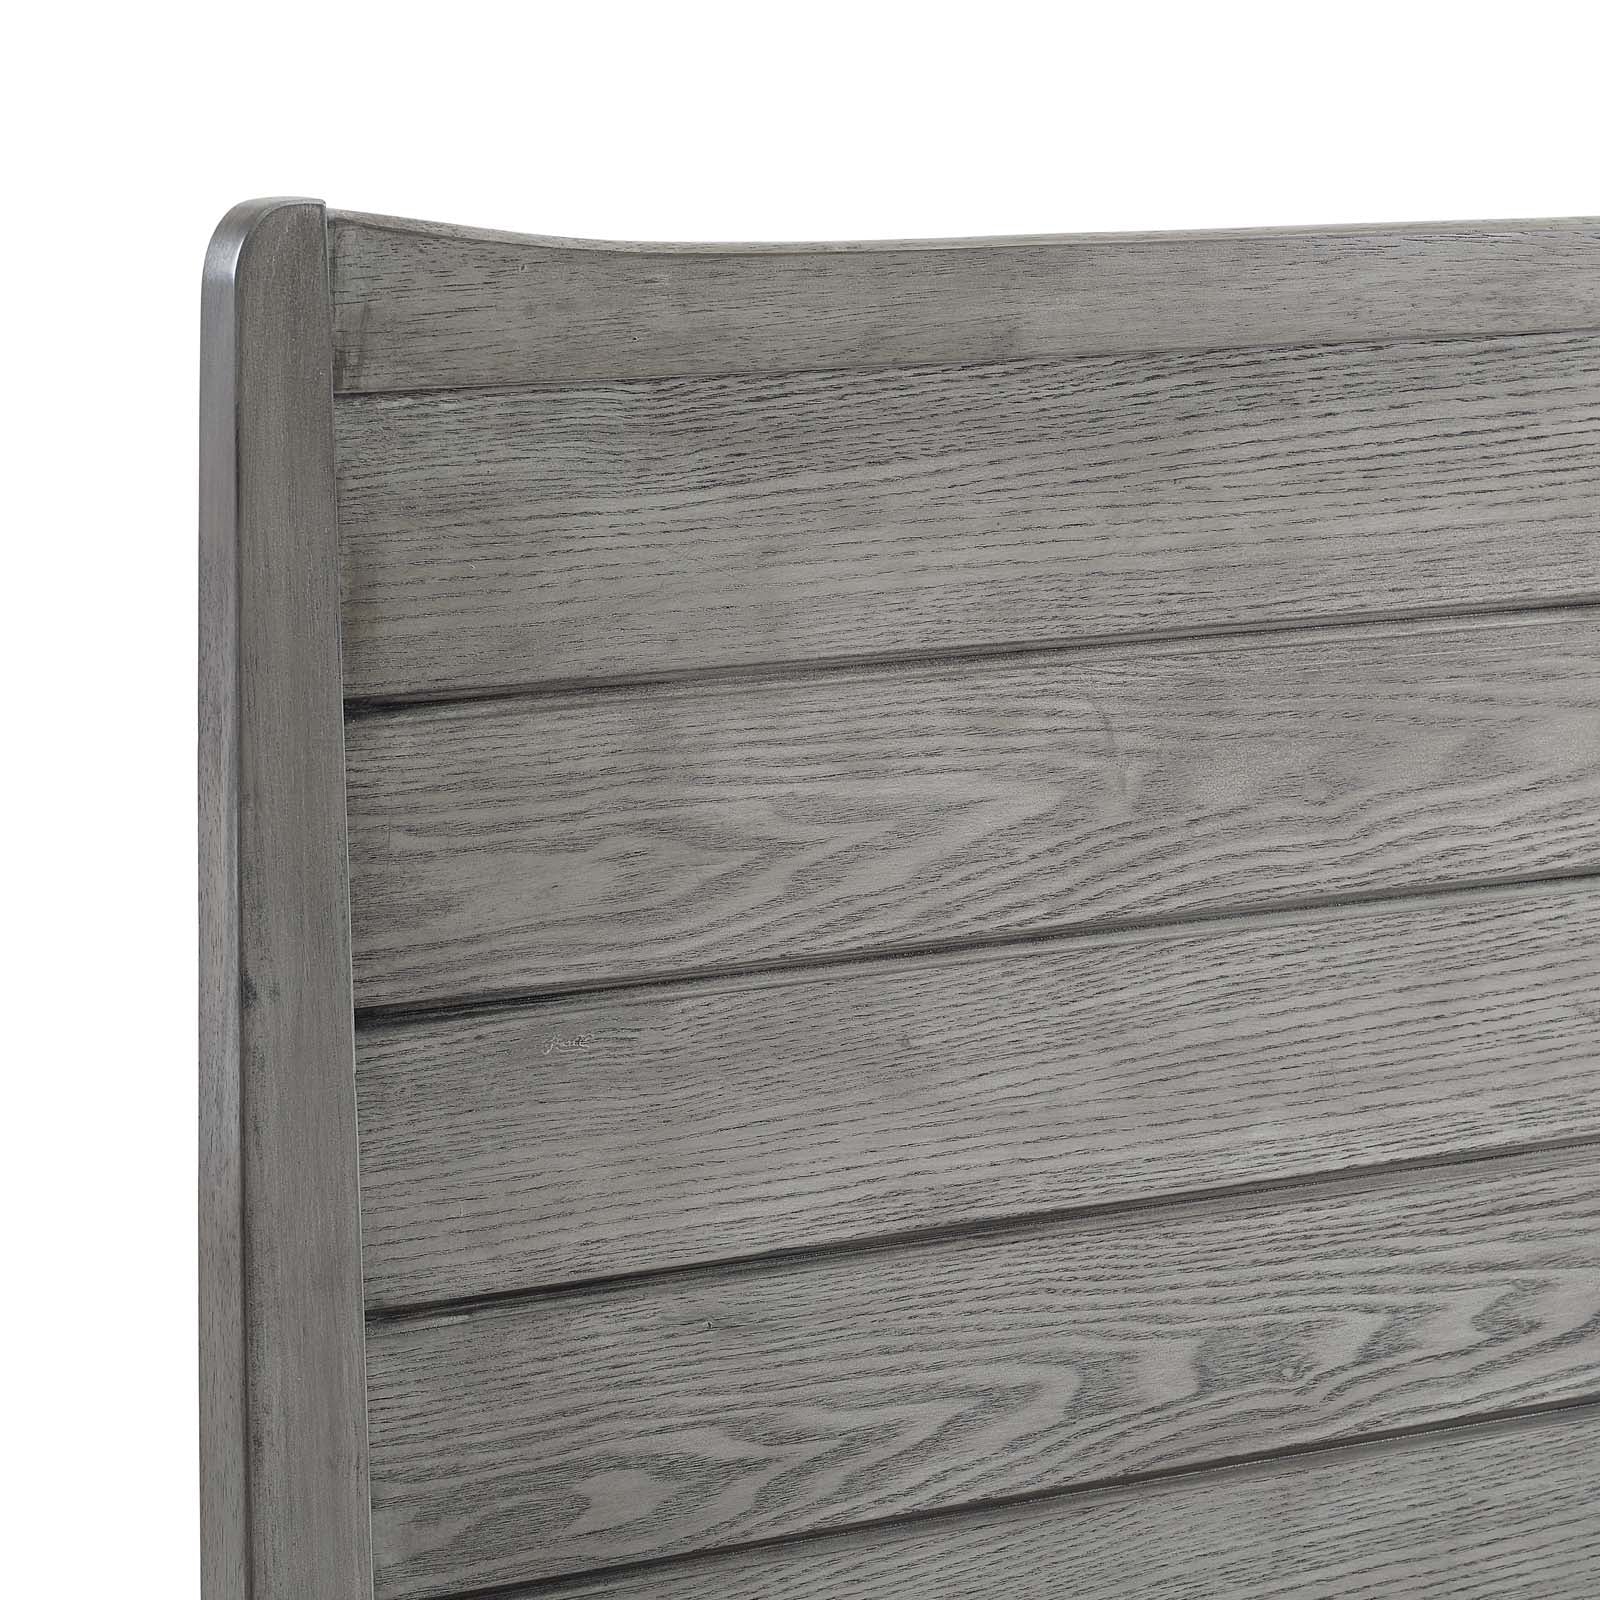 Georgia Wood Platform Bed-Bed-Modway-Wall2Wall Furnishings